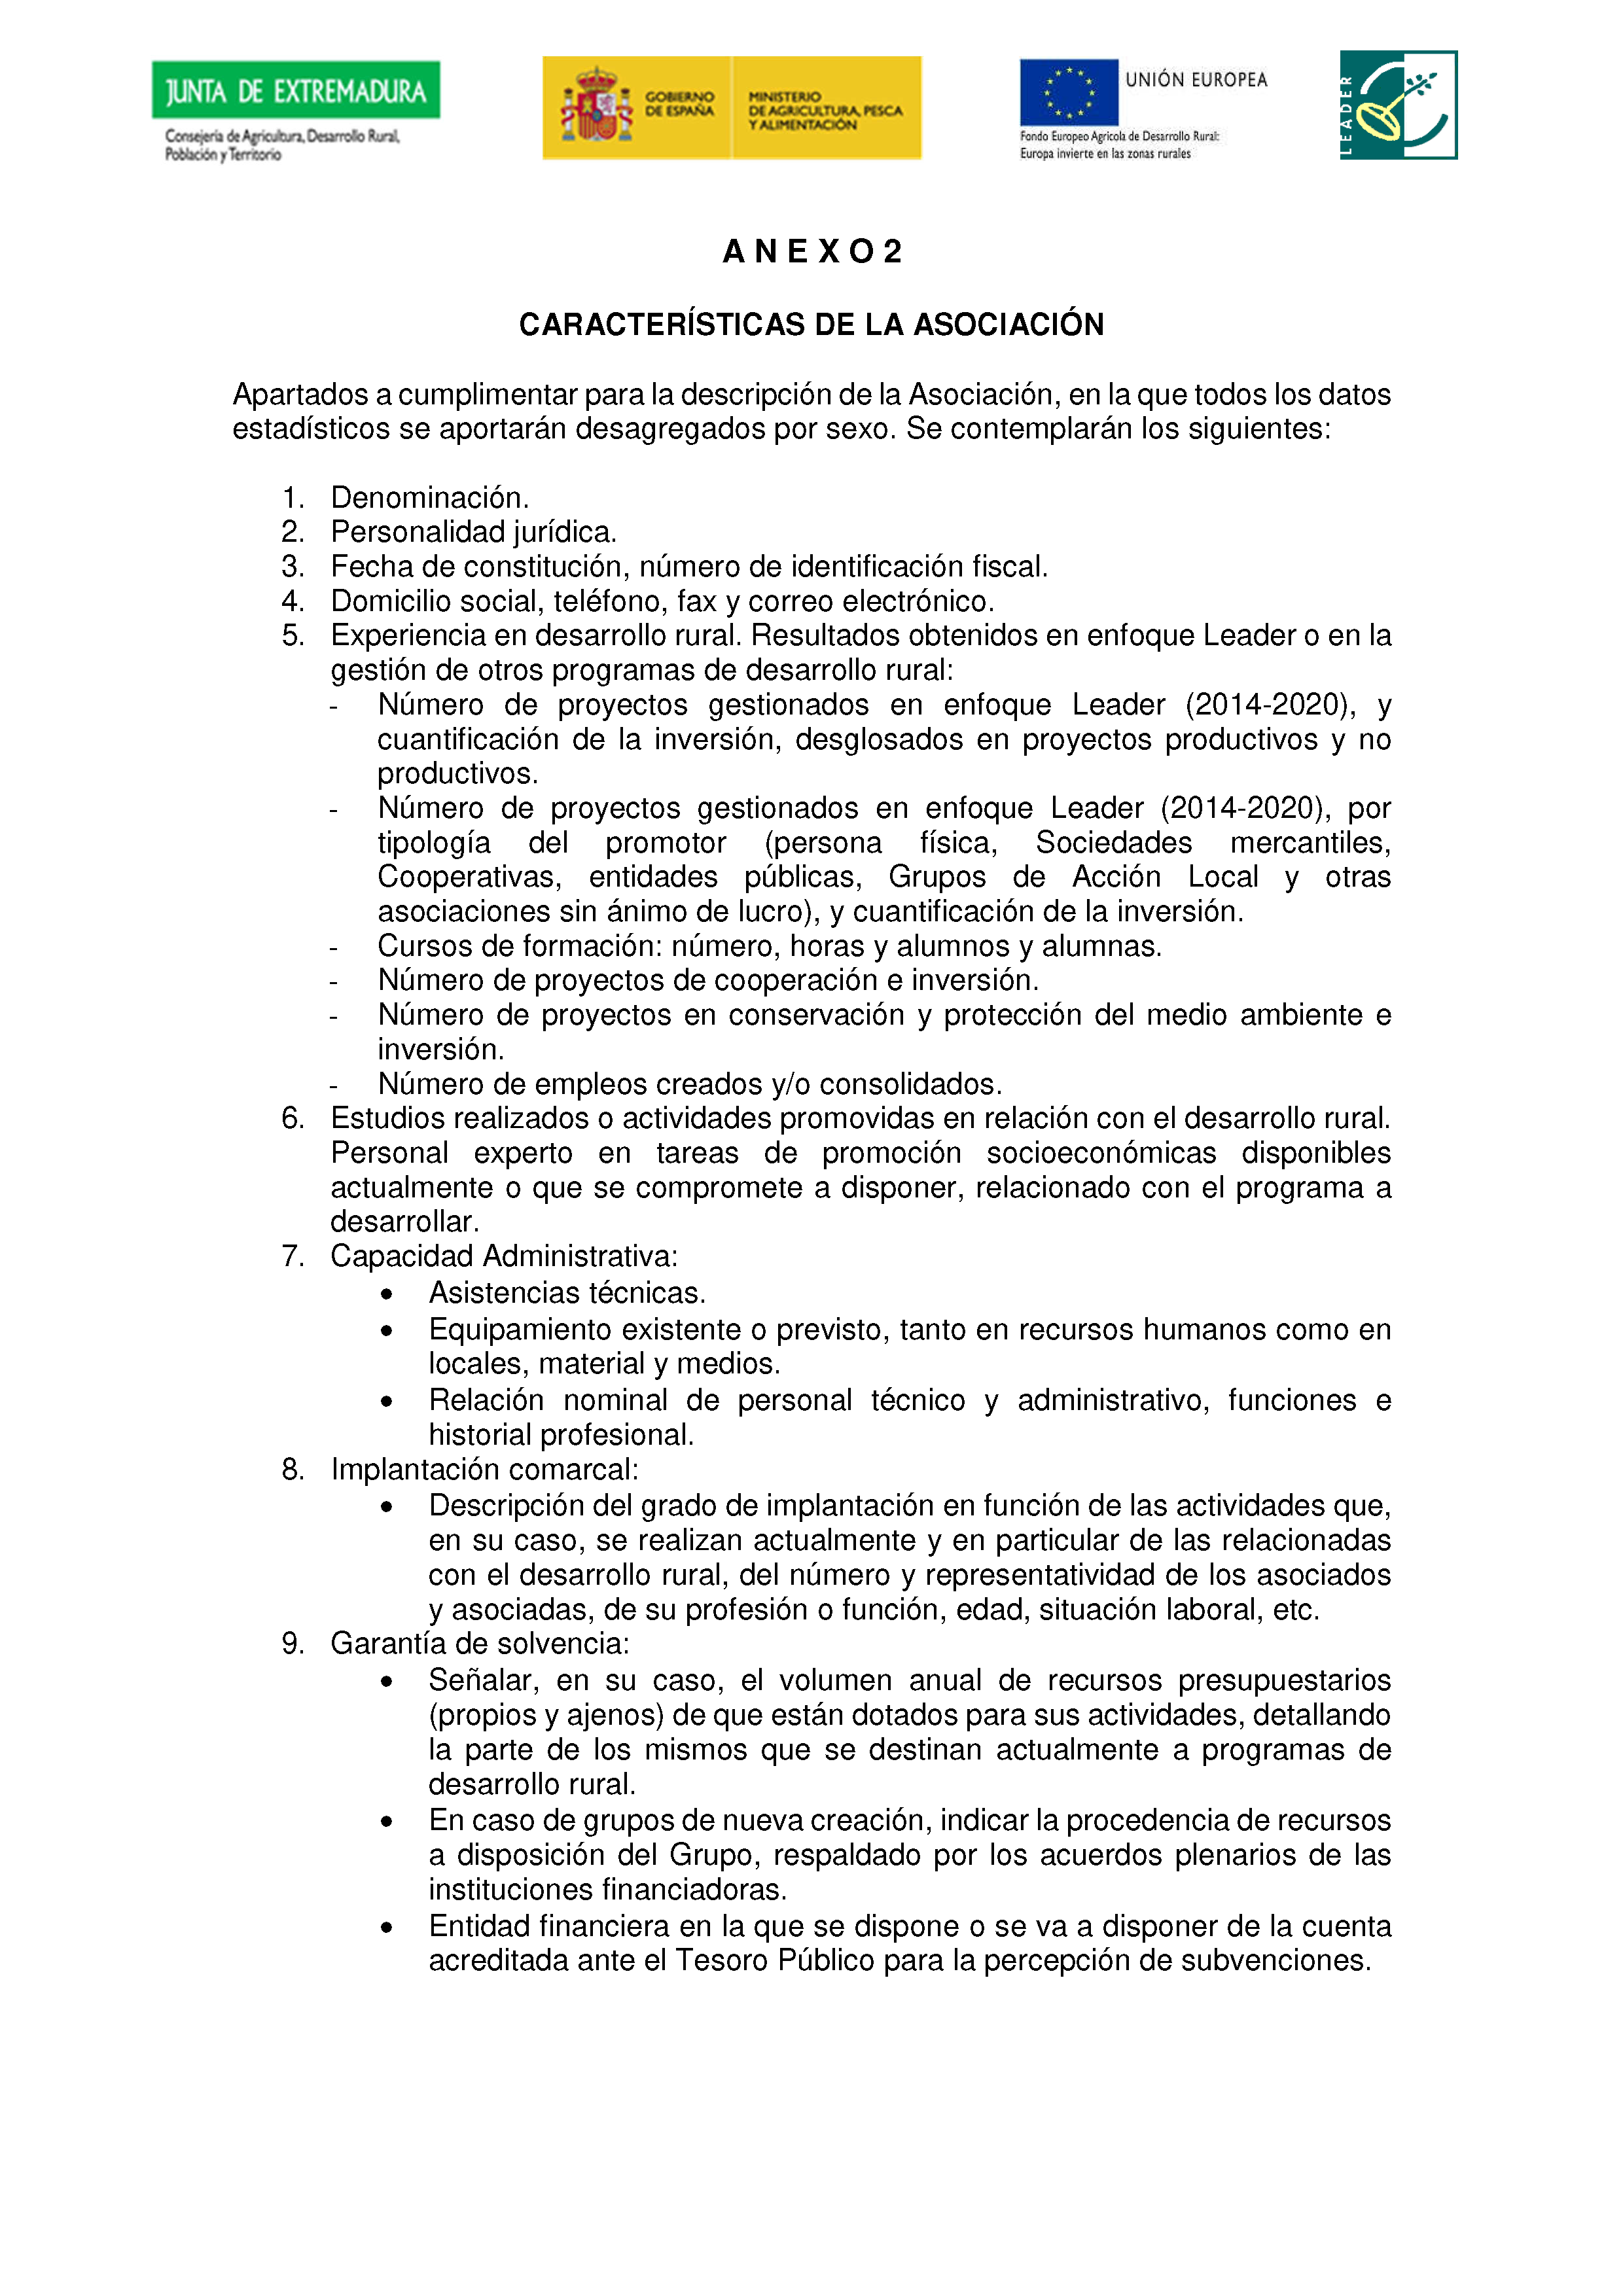 ANEXO 2 CARACTERISTICAS DE LA ASOCIACION Pag 1